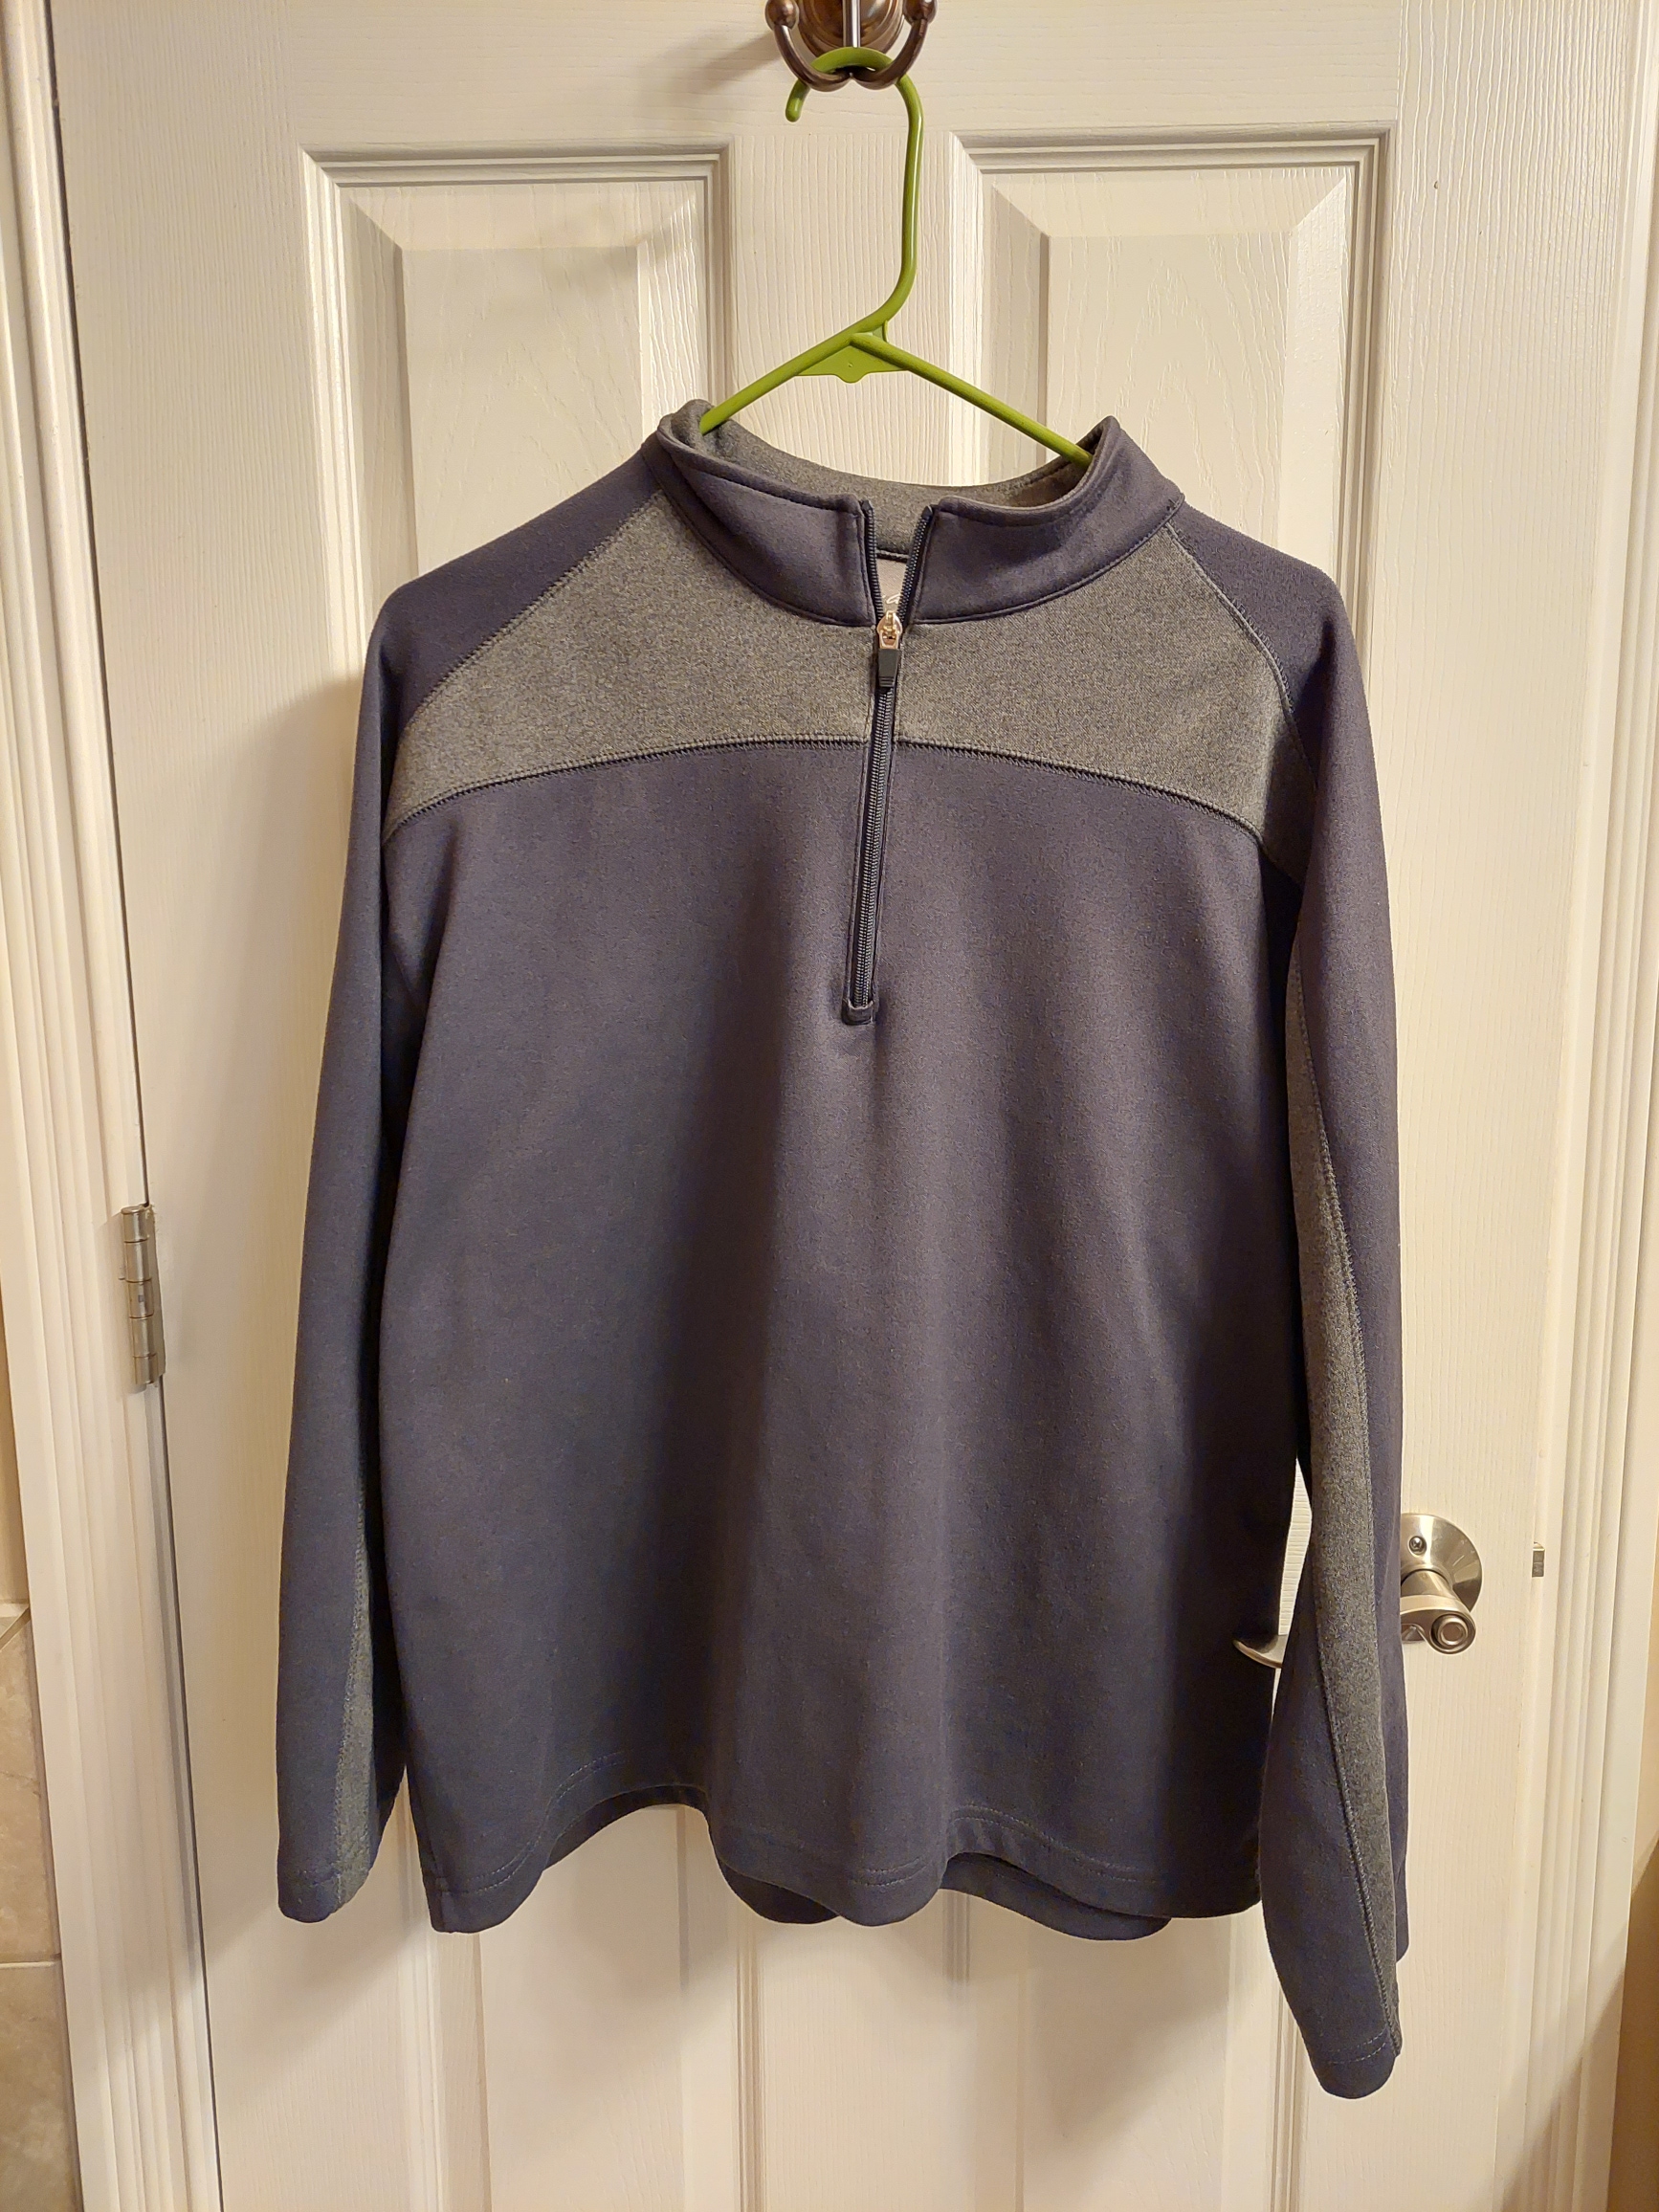 New Mens Medium Tommy Armour Golf Sweatshirt